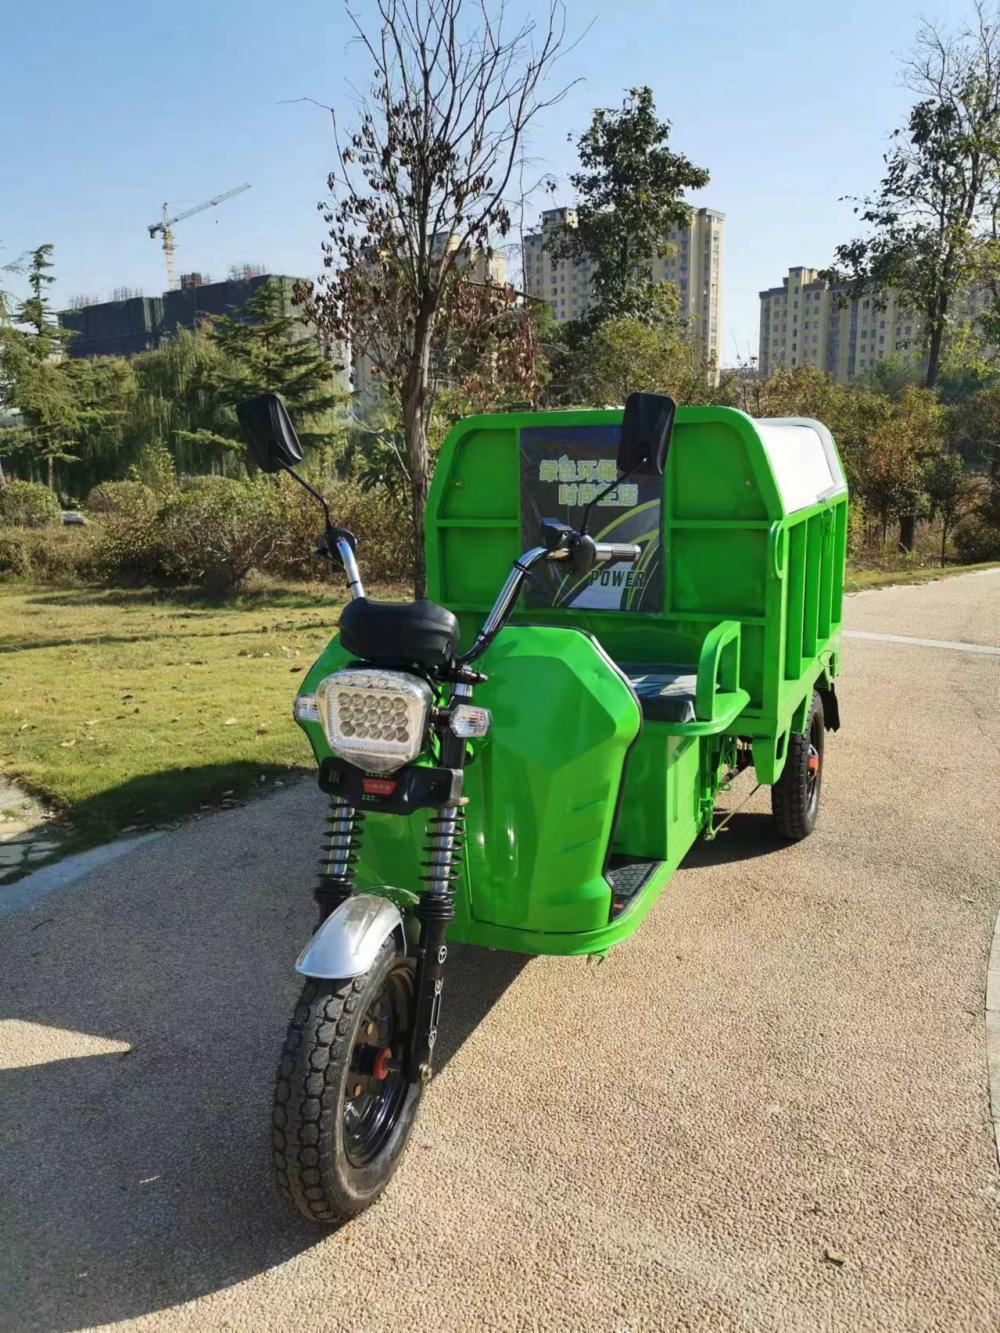 Three-wheeled Electric Garbage Truck